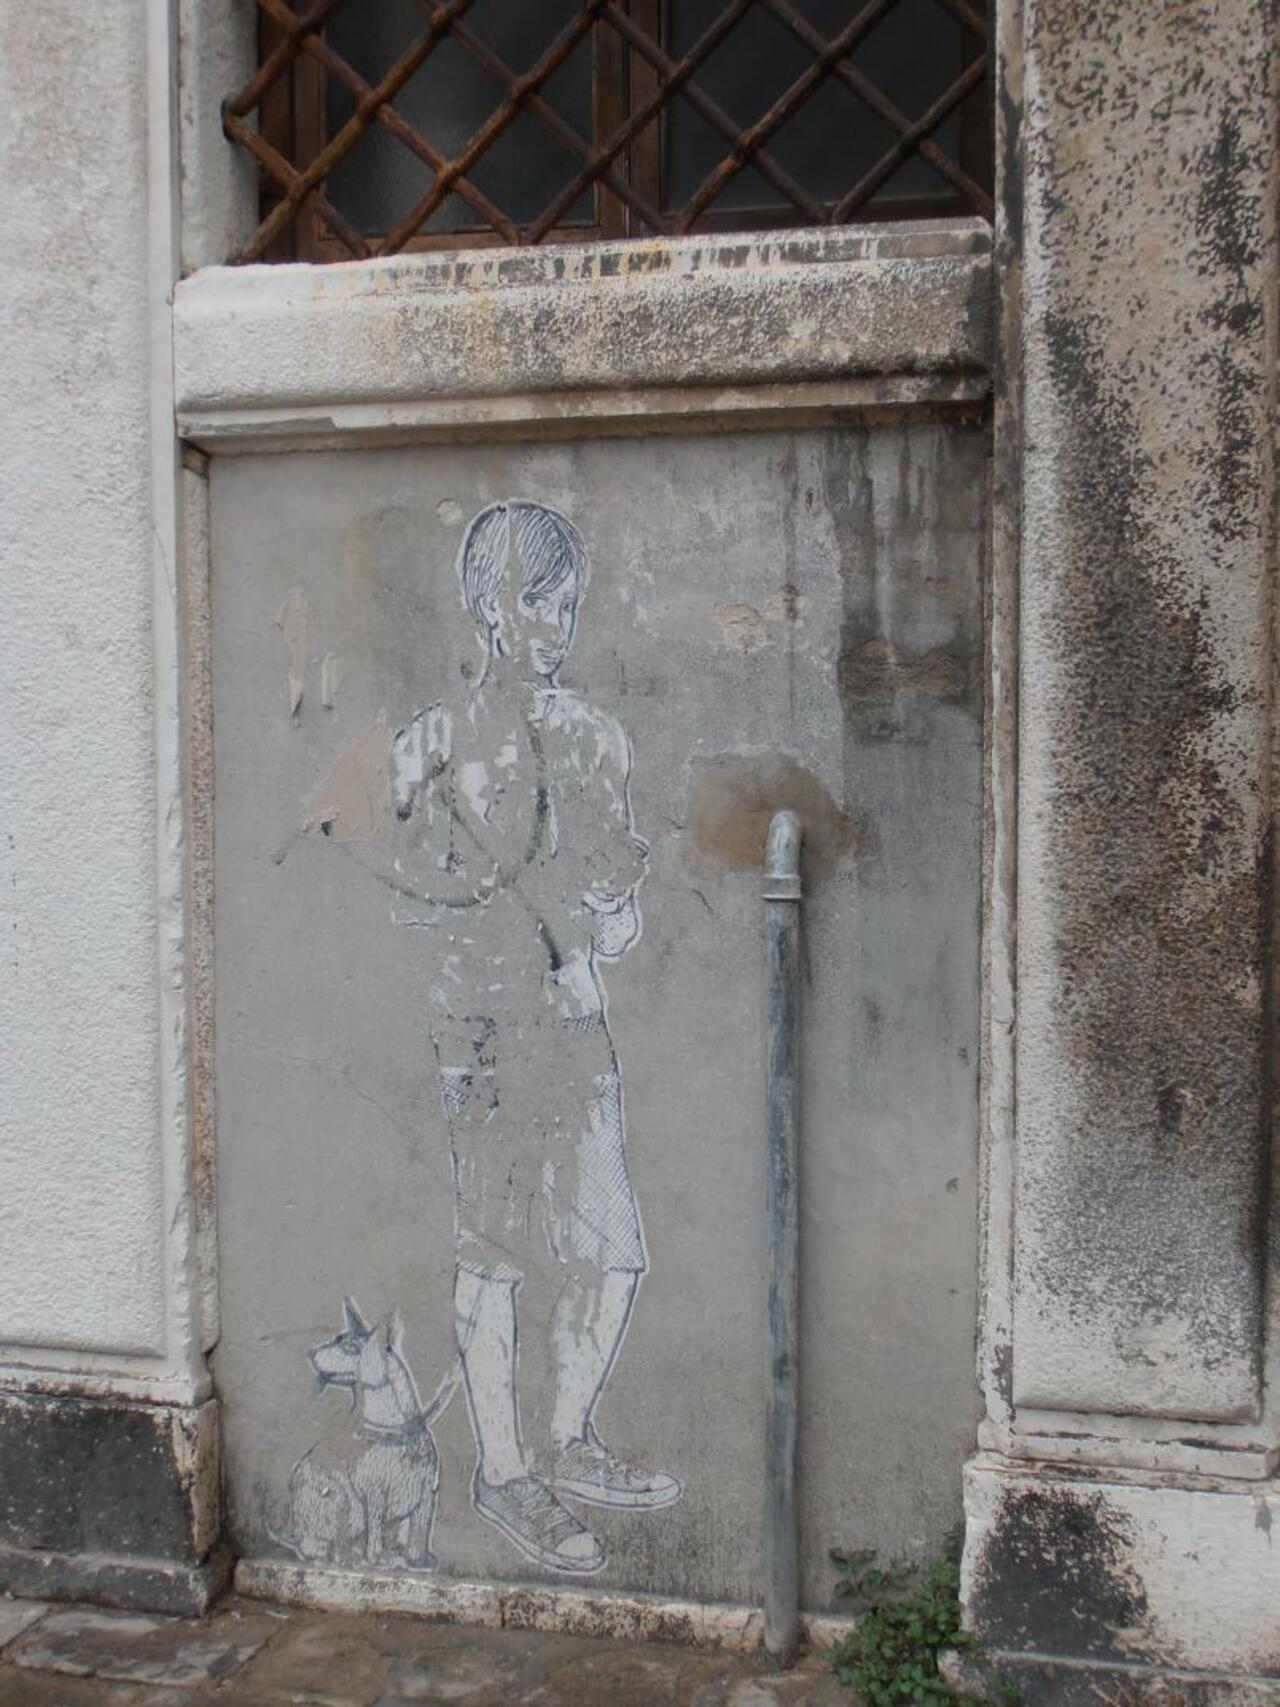 RT @AliciaDCrumpton: #graffiti #streetart #veniceitaly https://t.co/tYMCSjMQ7t